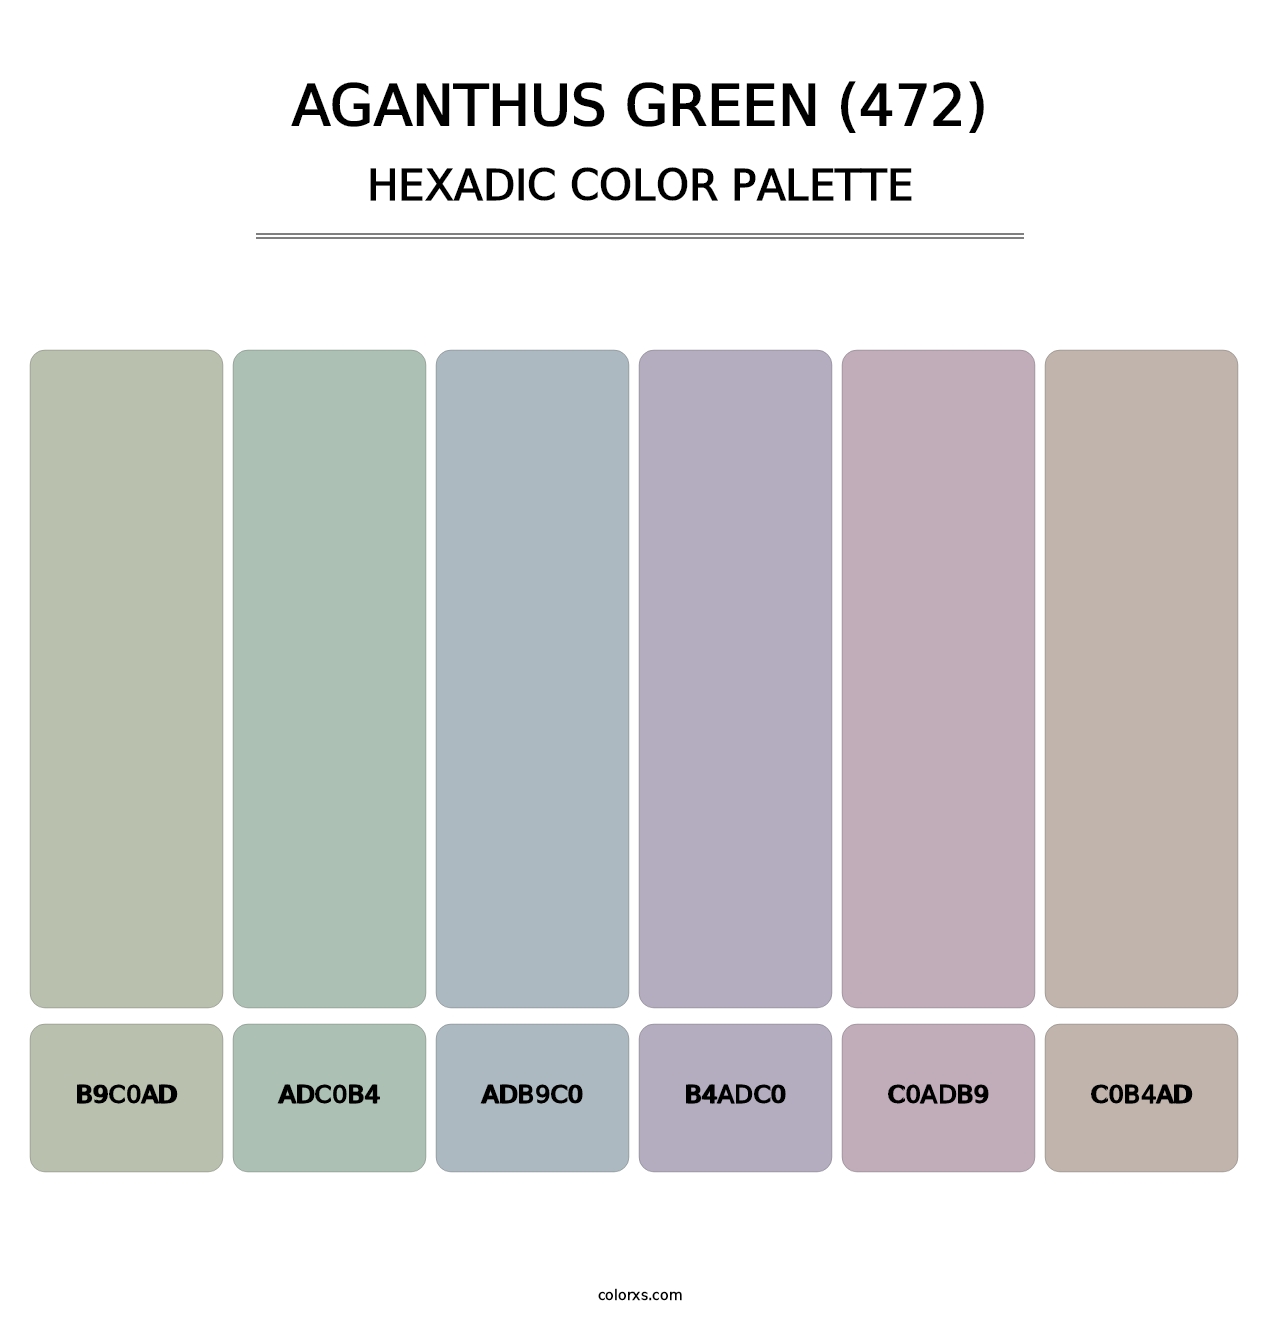 Aganthus Green (472) - Hexadic Color Palette